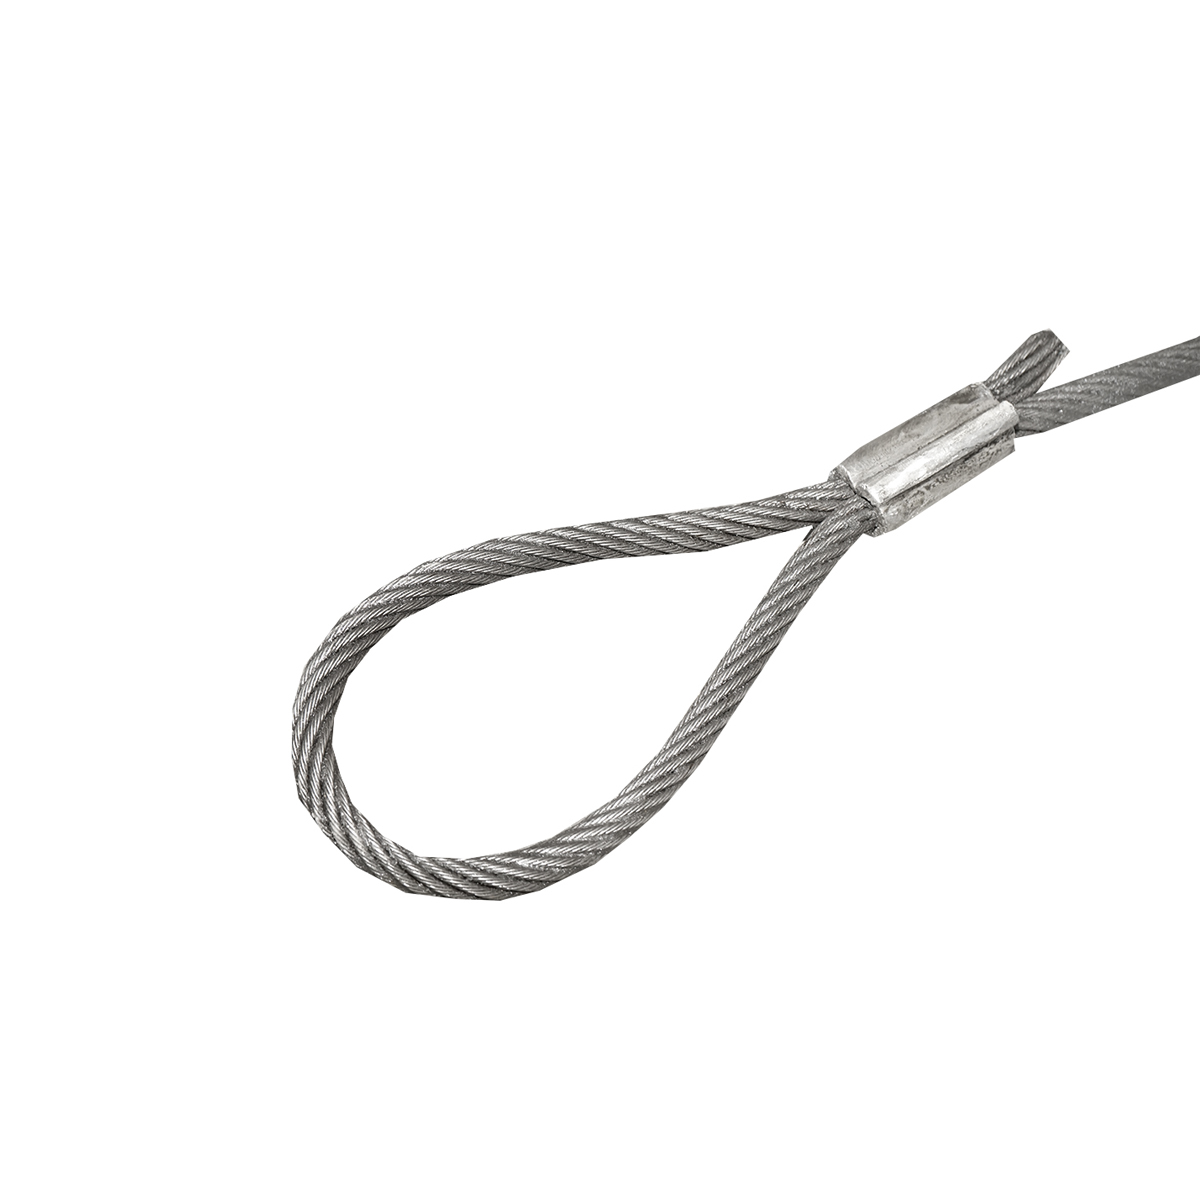 Cablu/sufa troliu din otel cu grosime de 16mm si lungime de 6m cu inele pentru tractat sau ridicat